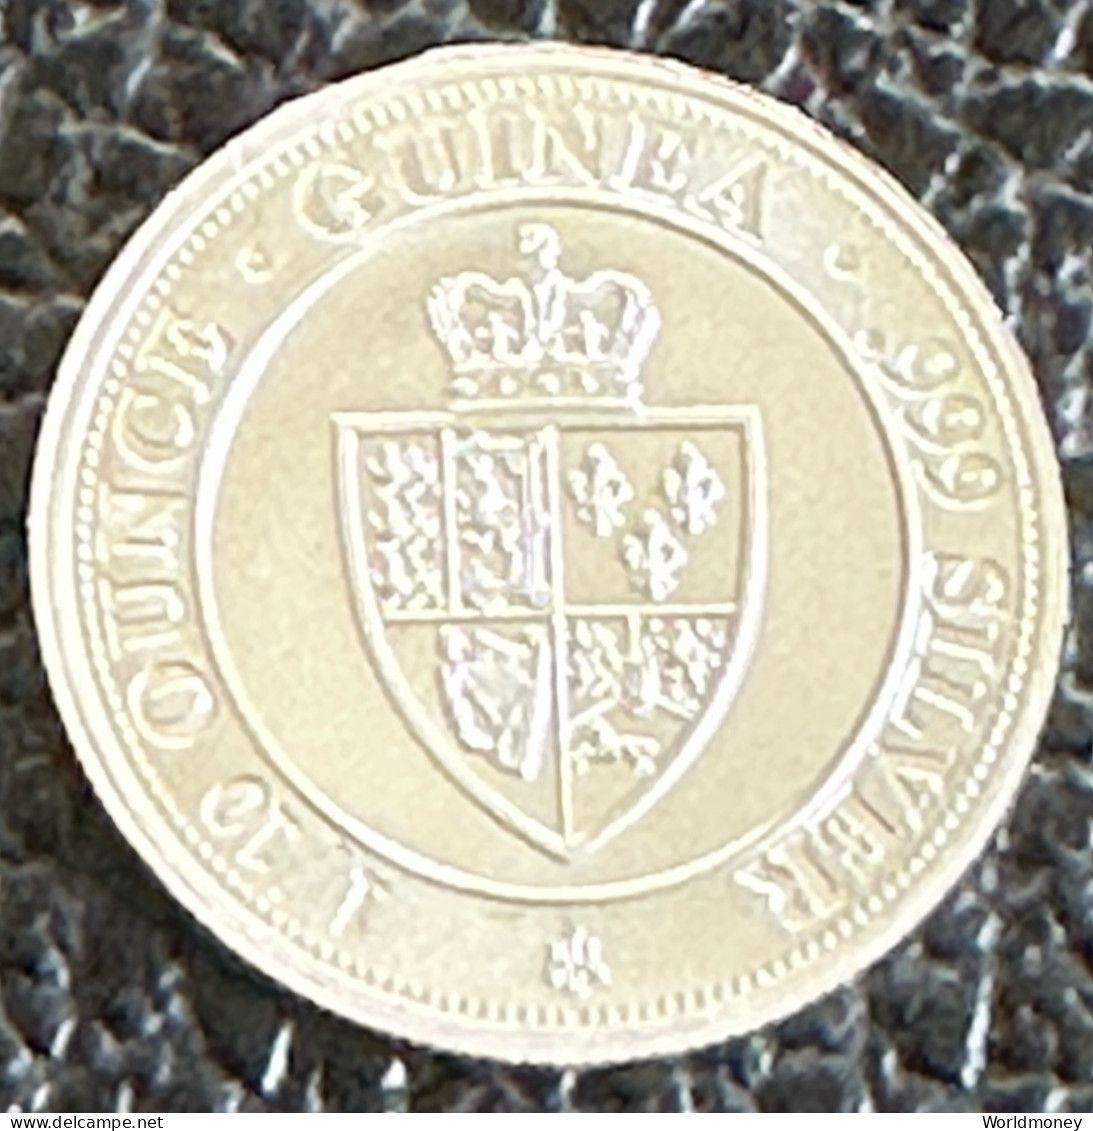 Saint Helena 10 Pence 2020  -  1/10 Oz Spade Guinea Shield (Silver) - Sainte-Hélène